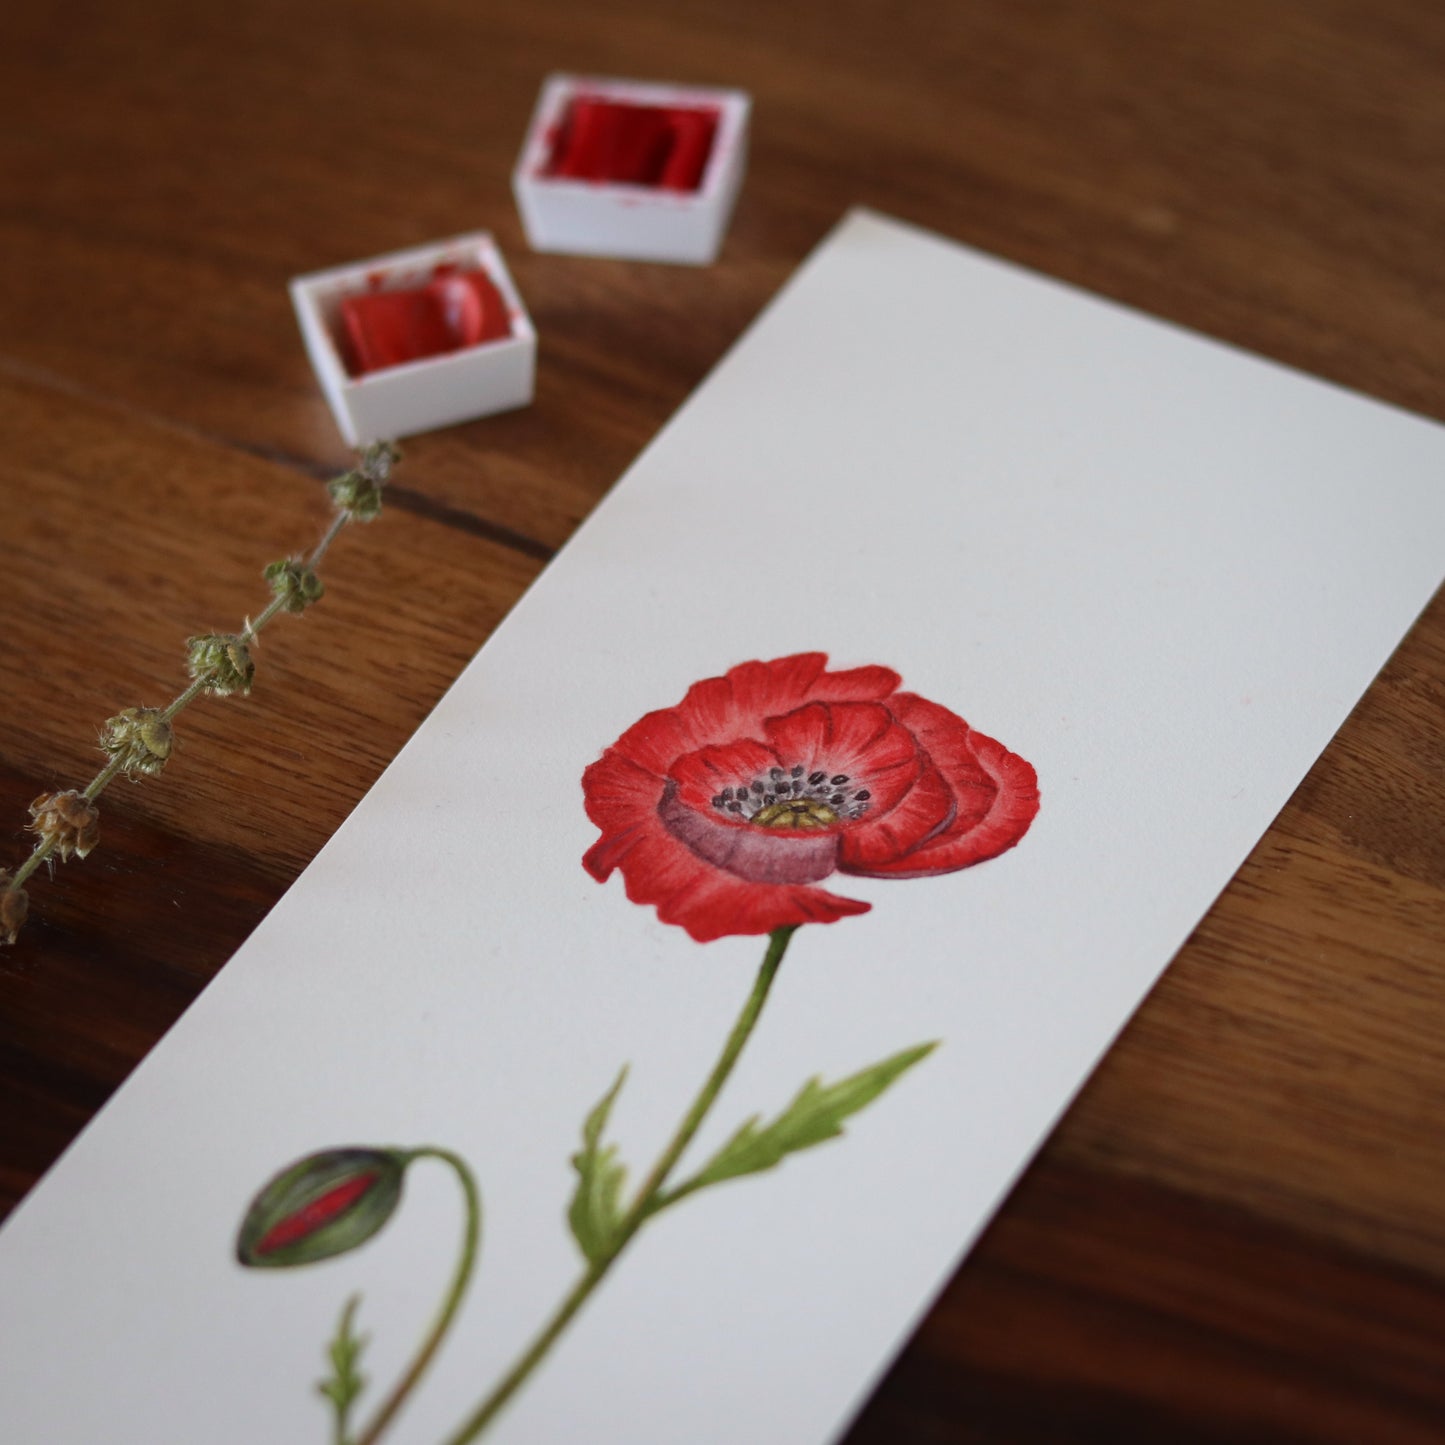 Poppy Flower - Original botanical illustration